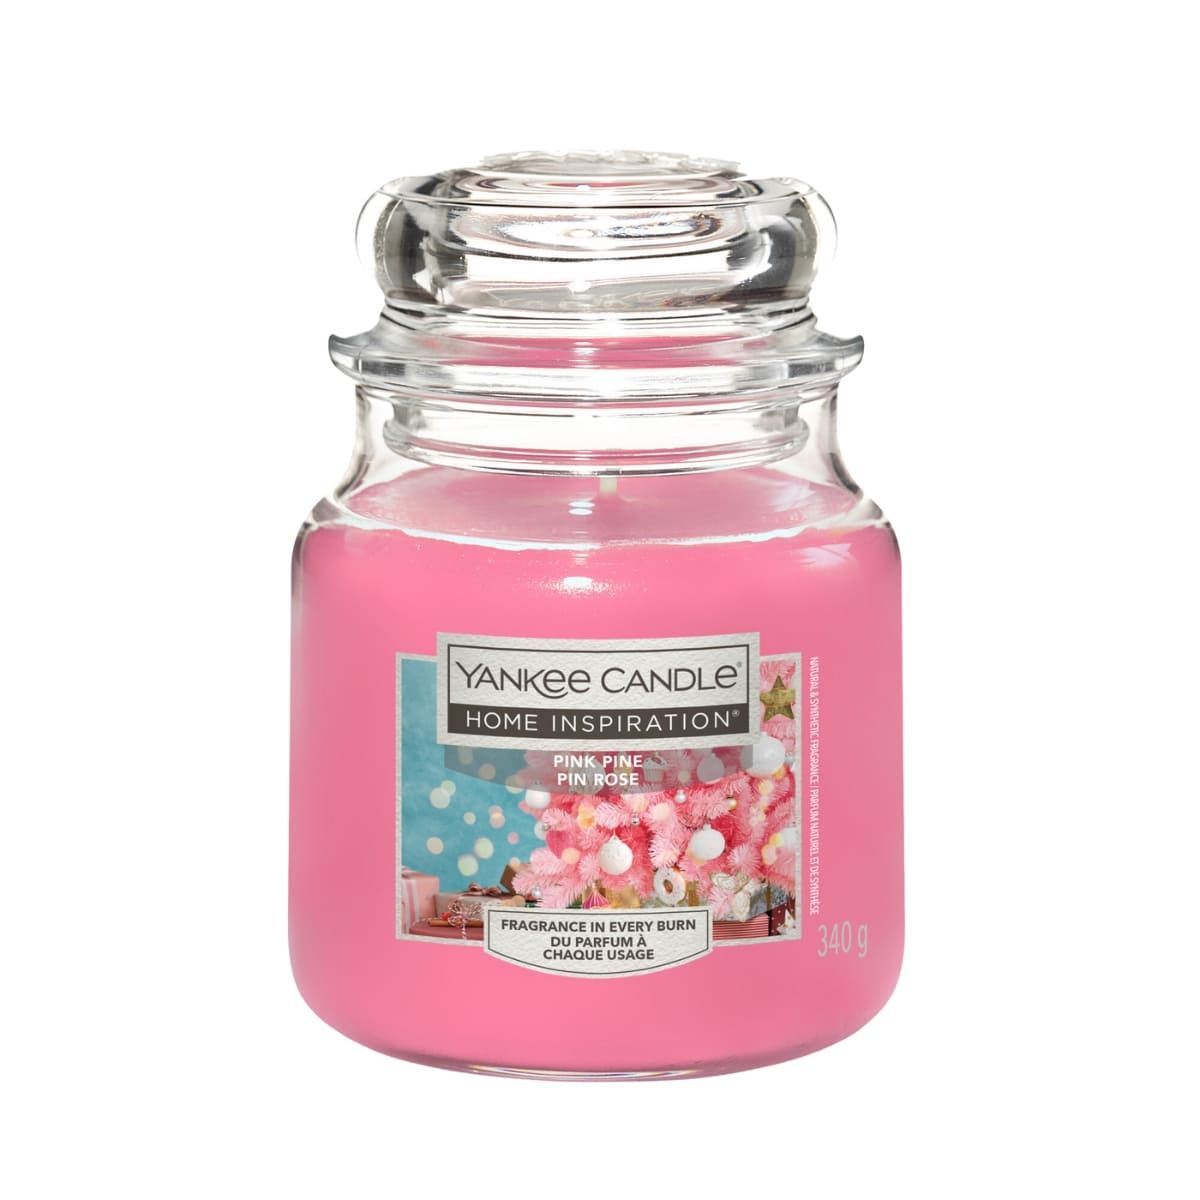 Ароматическая Свеча Yankee Candle Home Inspiration Pink Pine, 340 гр ароматическая свеча yankee candle home inspiration sugared blossom 340 гр